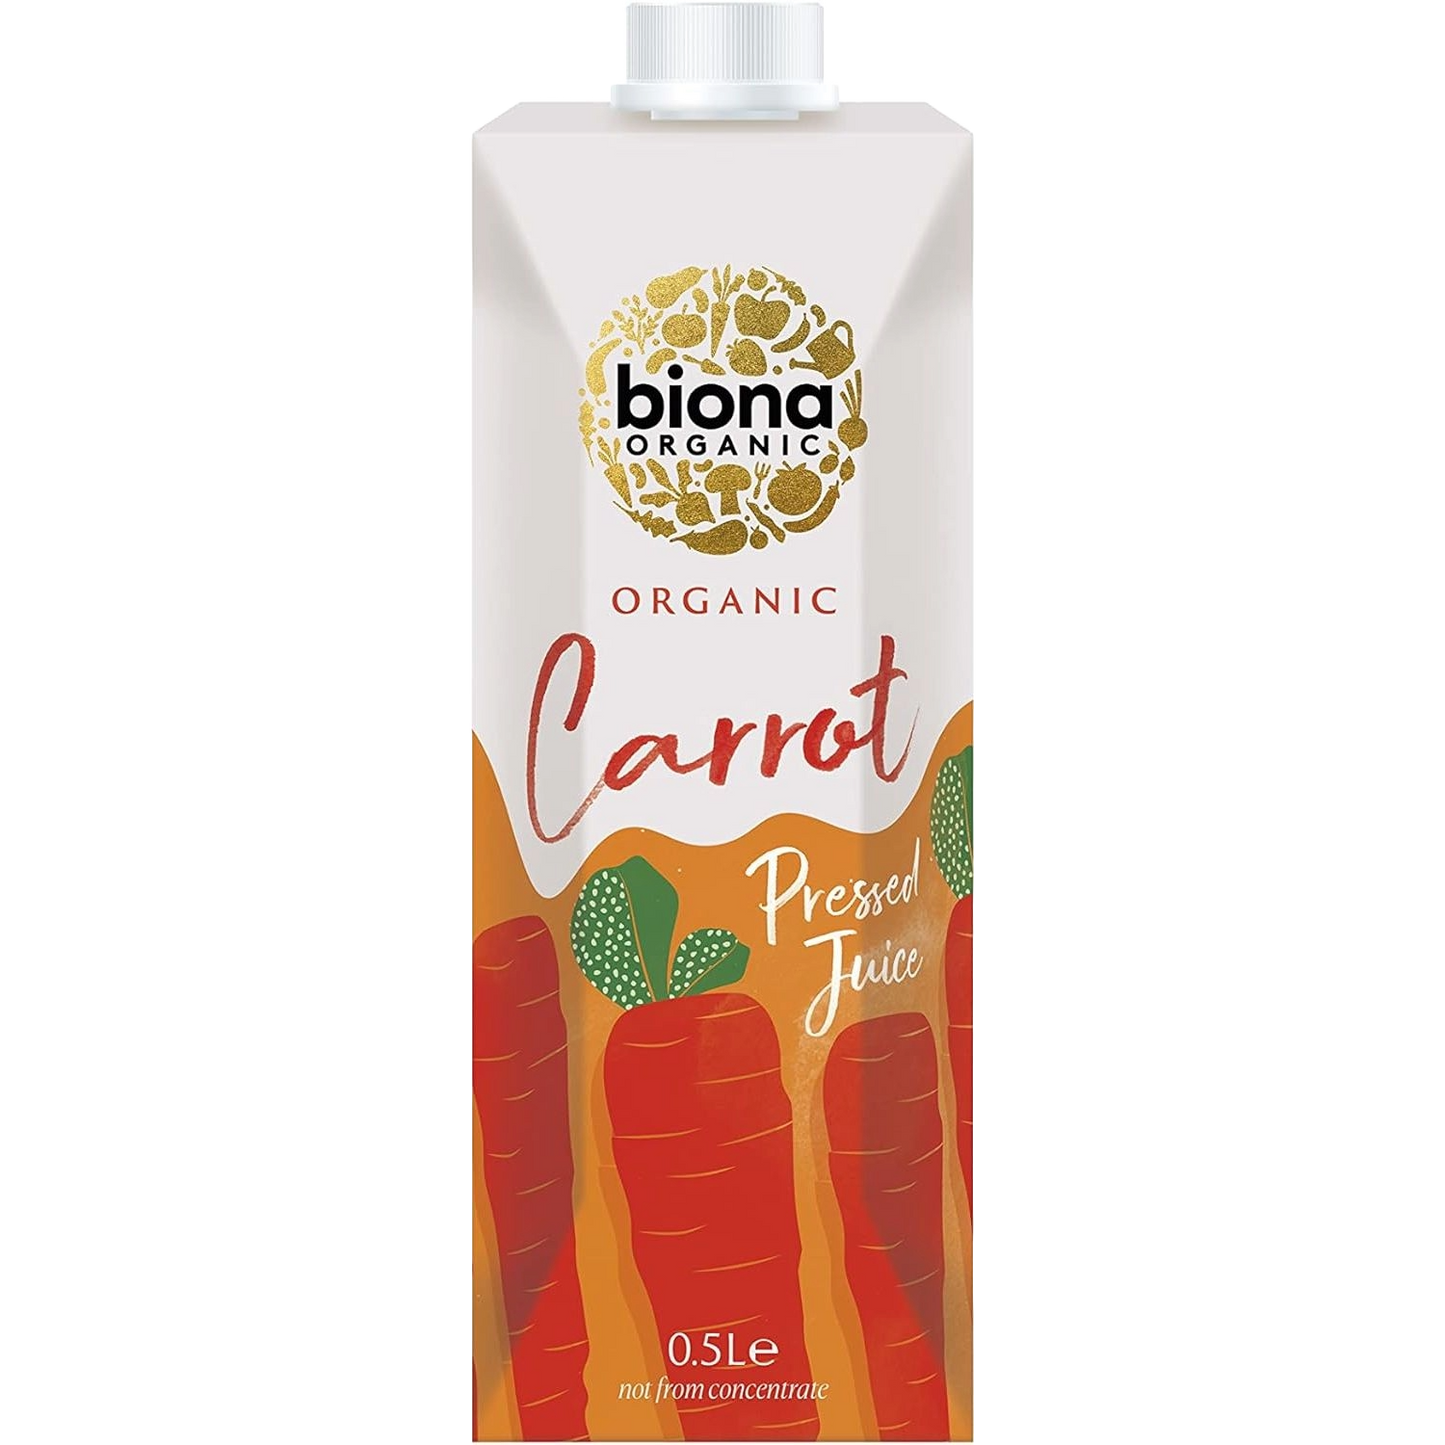 Biona Organic Pressed Carrot Juice 500ml